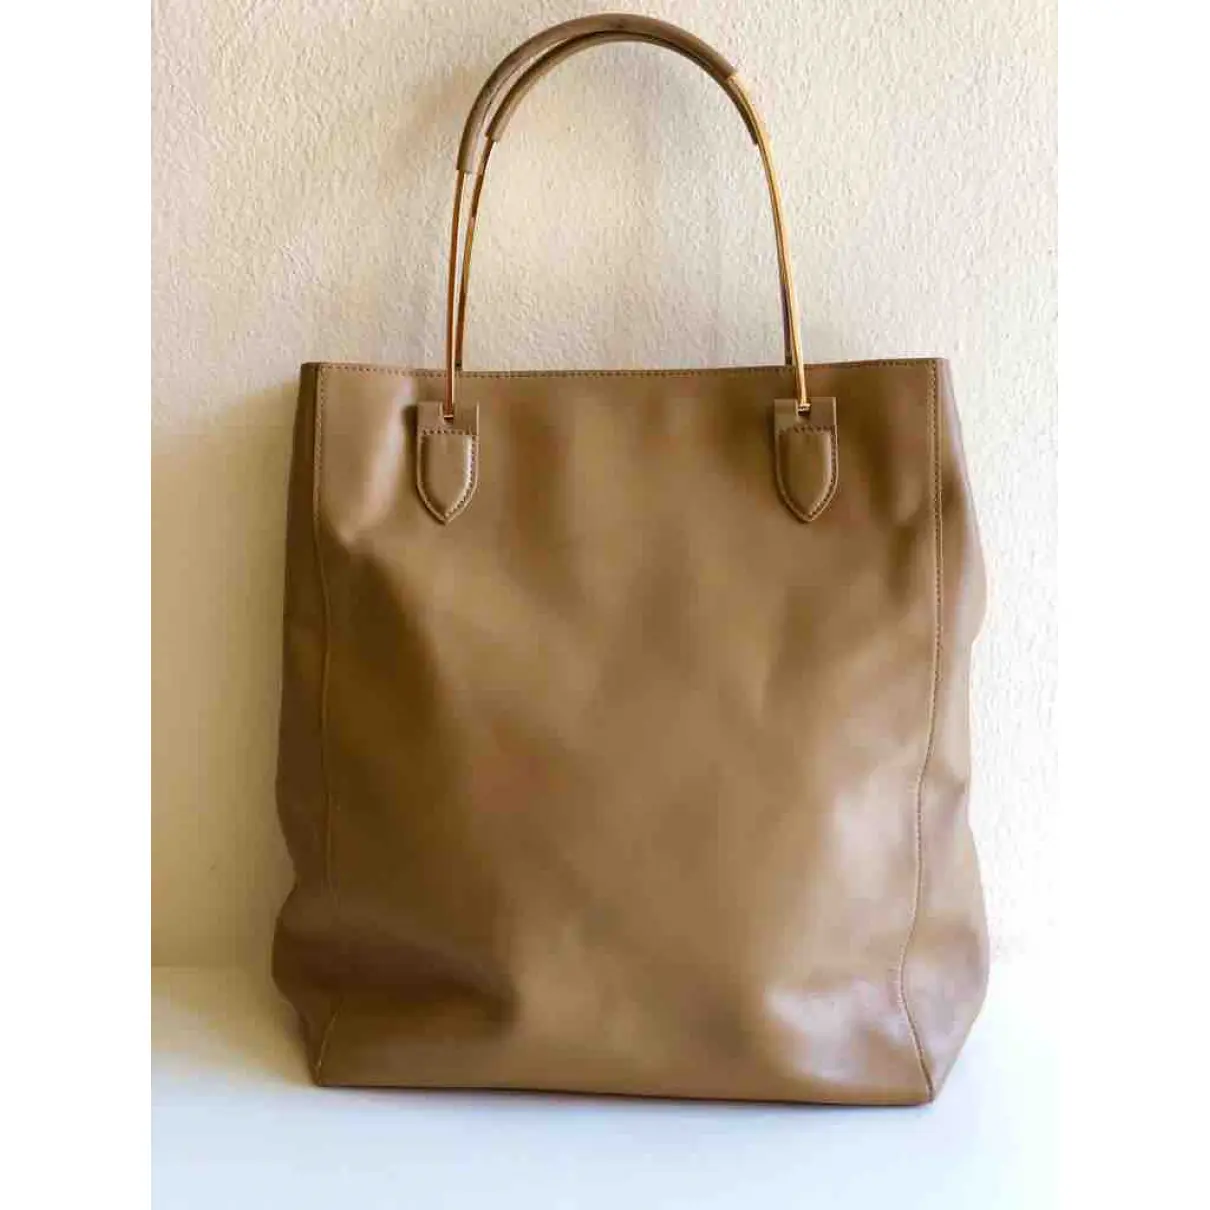 Buy Patrizia Pepe Leather handbag online